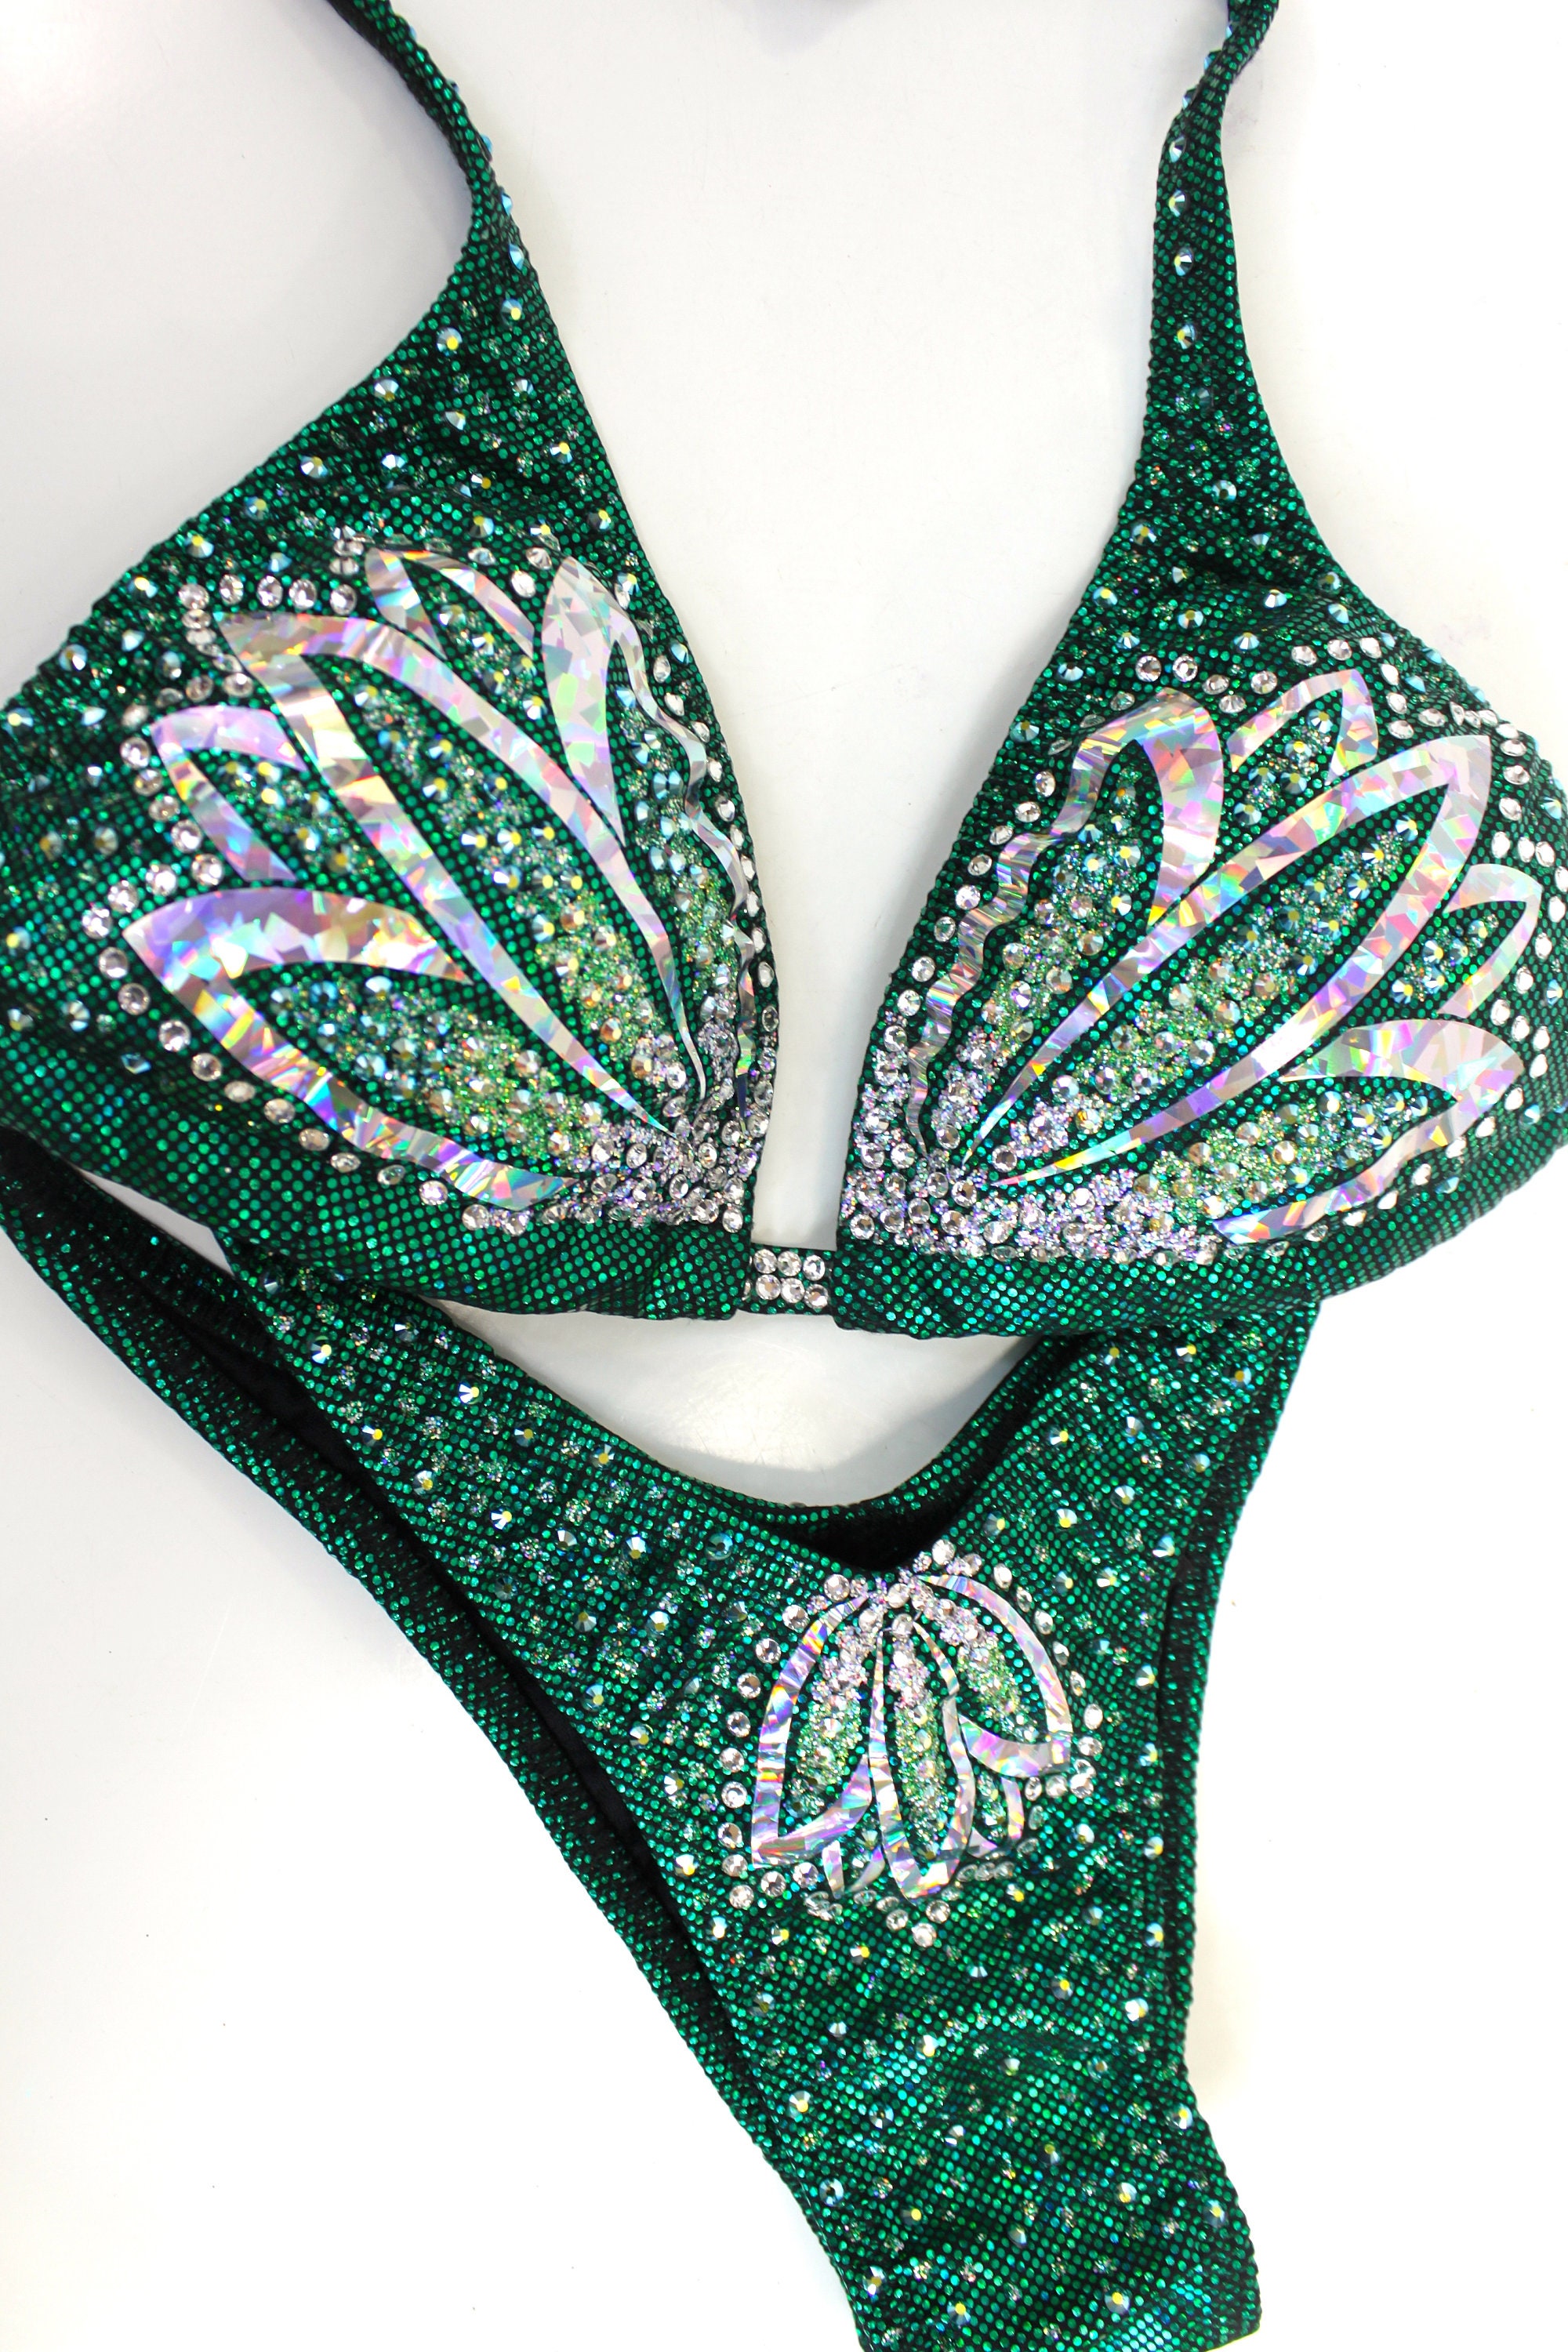 NPC Ifbb Competition Bikini / Deep Green Sparkling Flower | Etsy